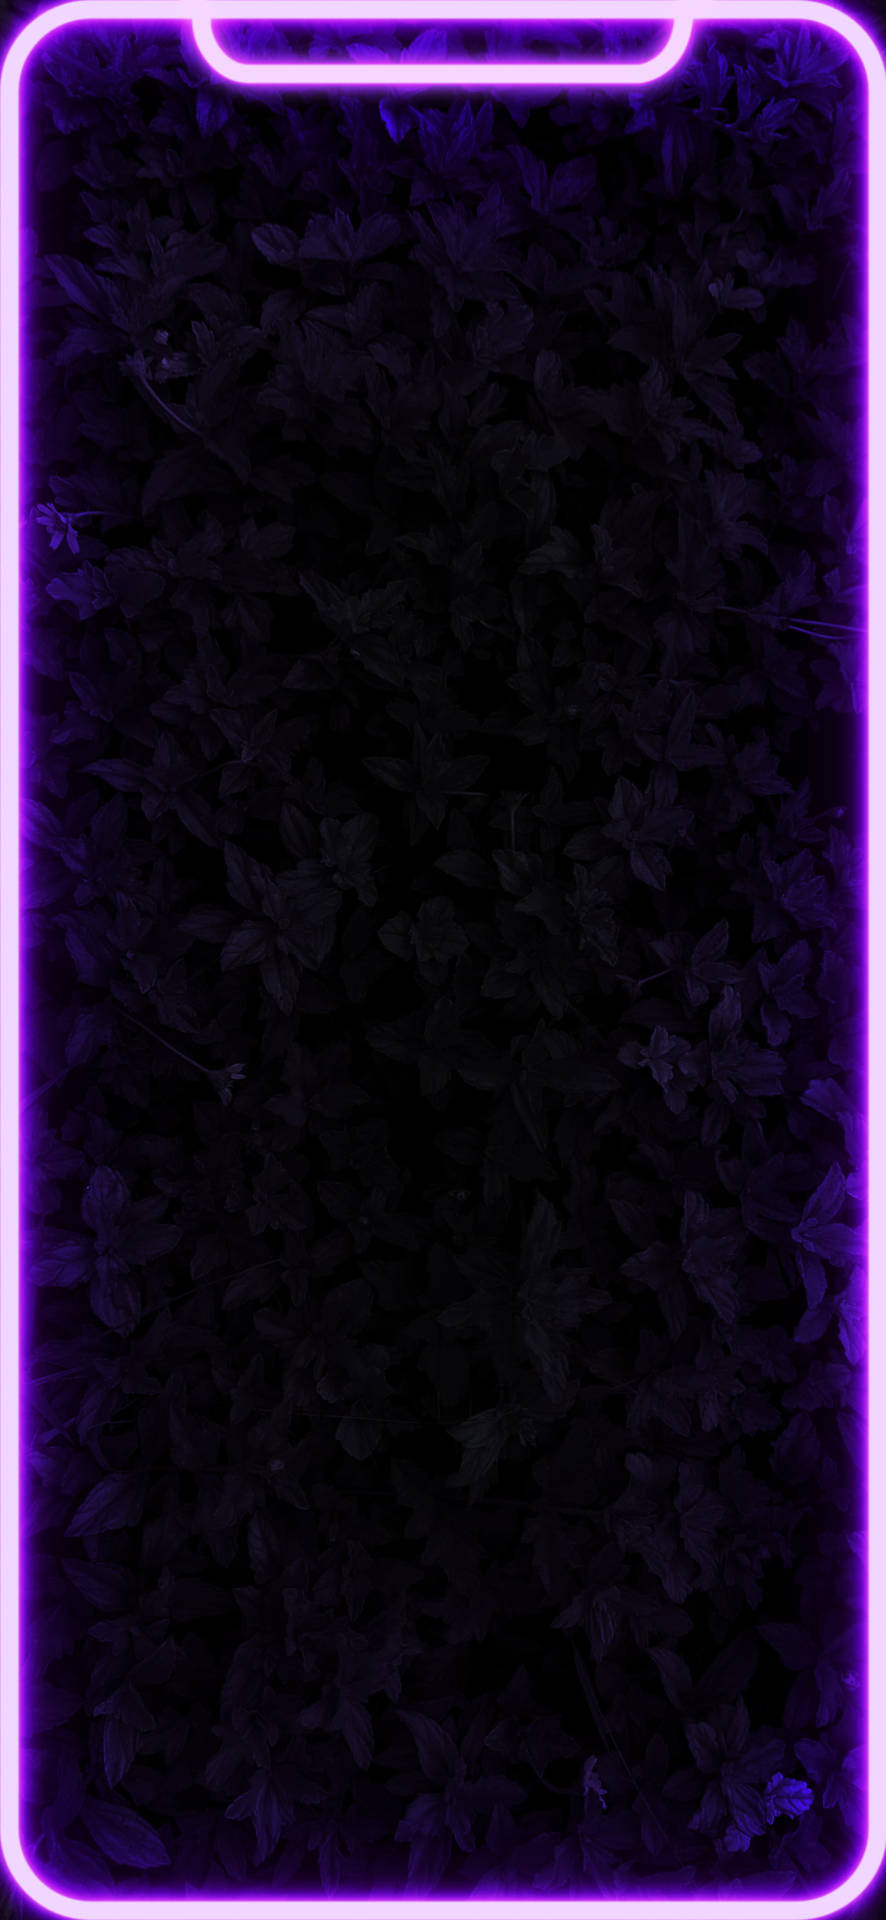 Glowing Black And Purple Aesthetic Phone Wallpaper